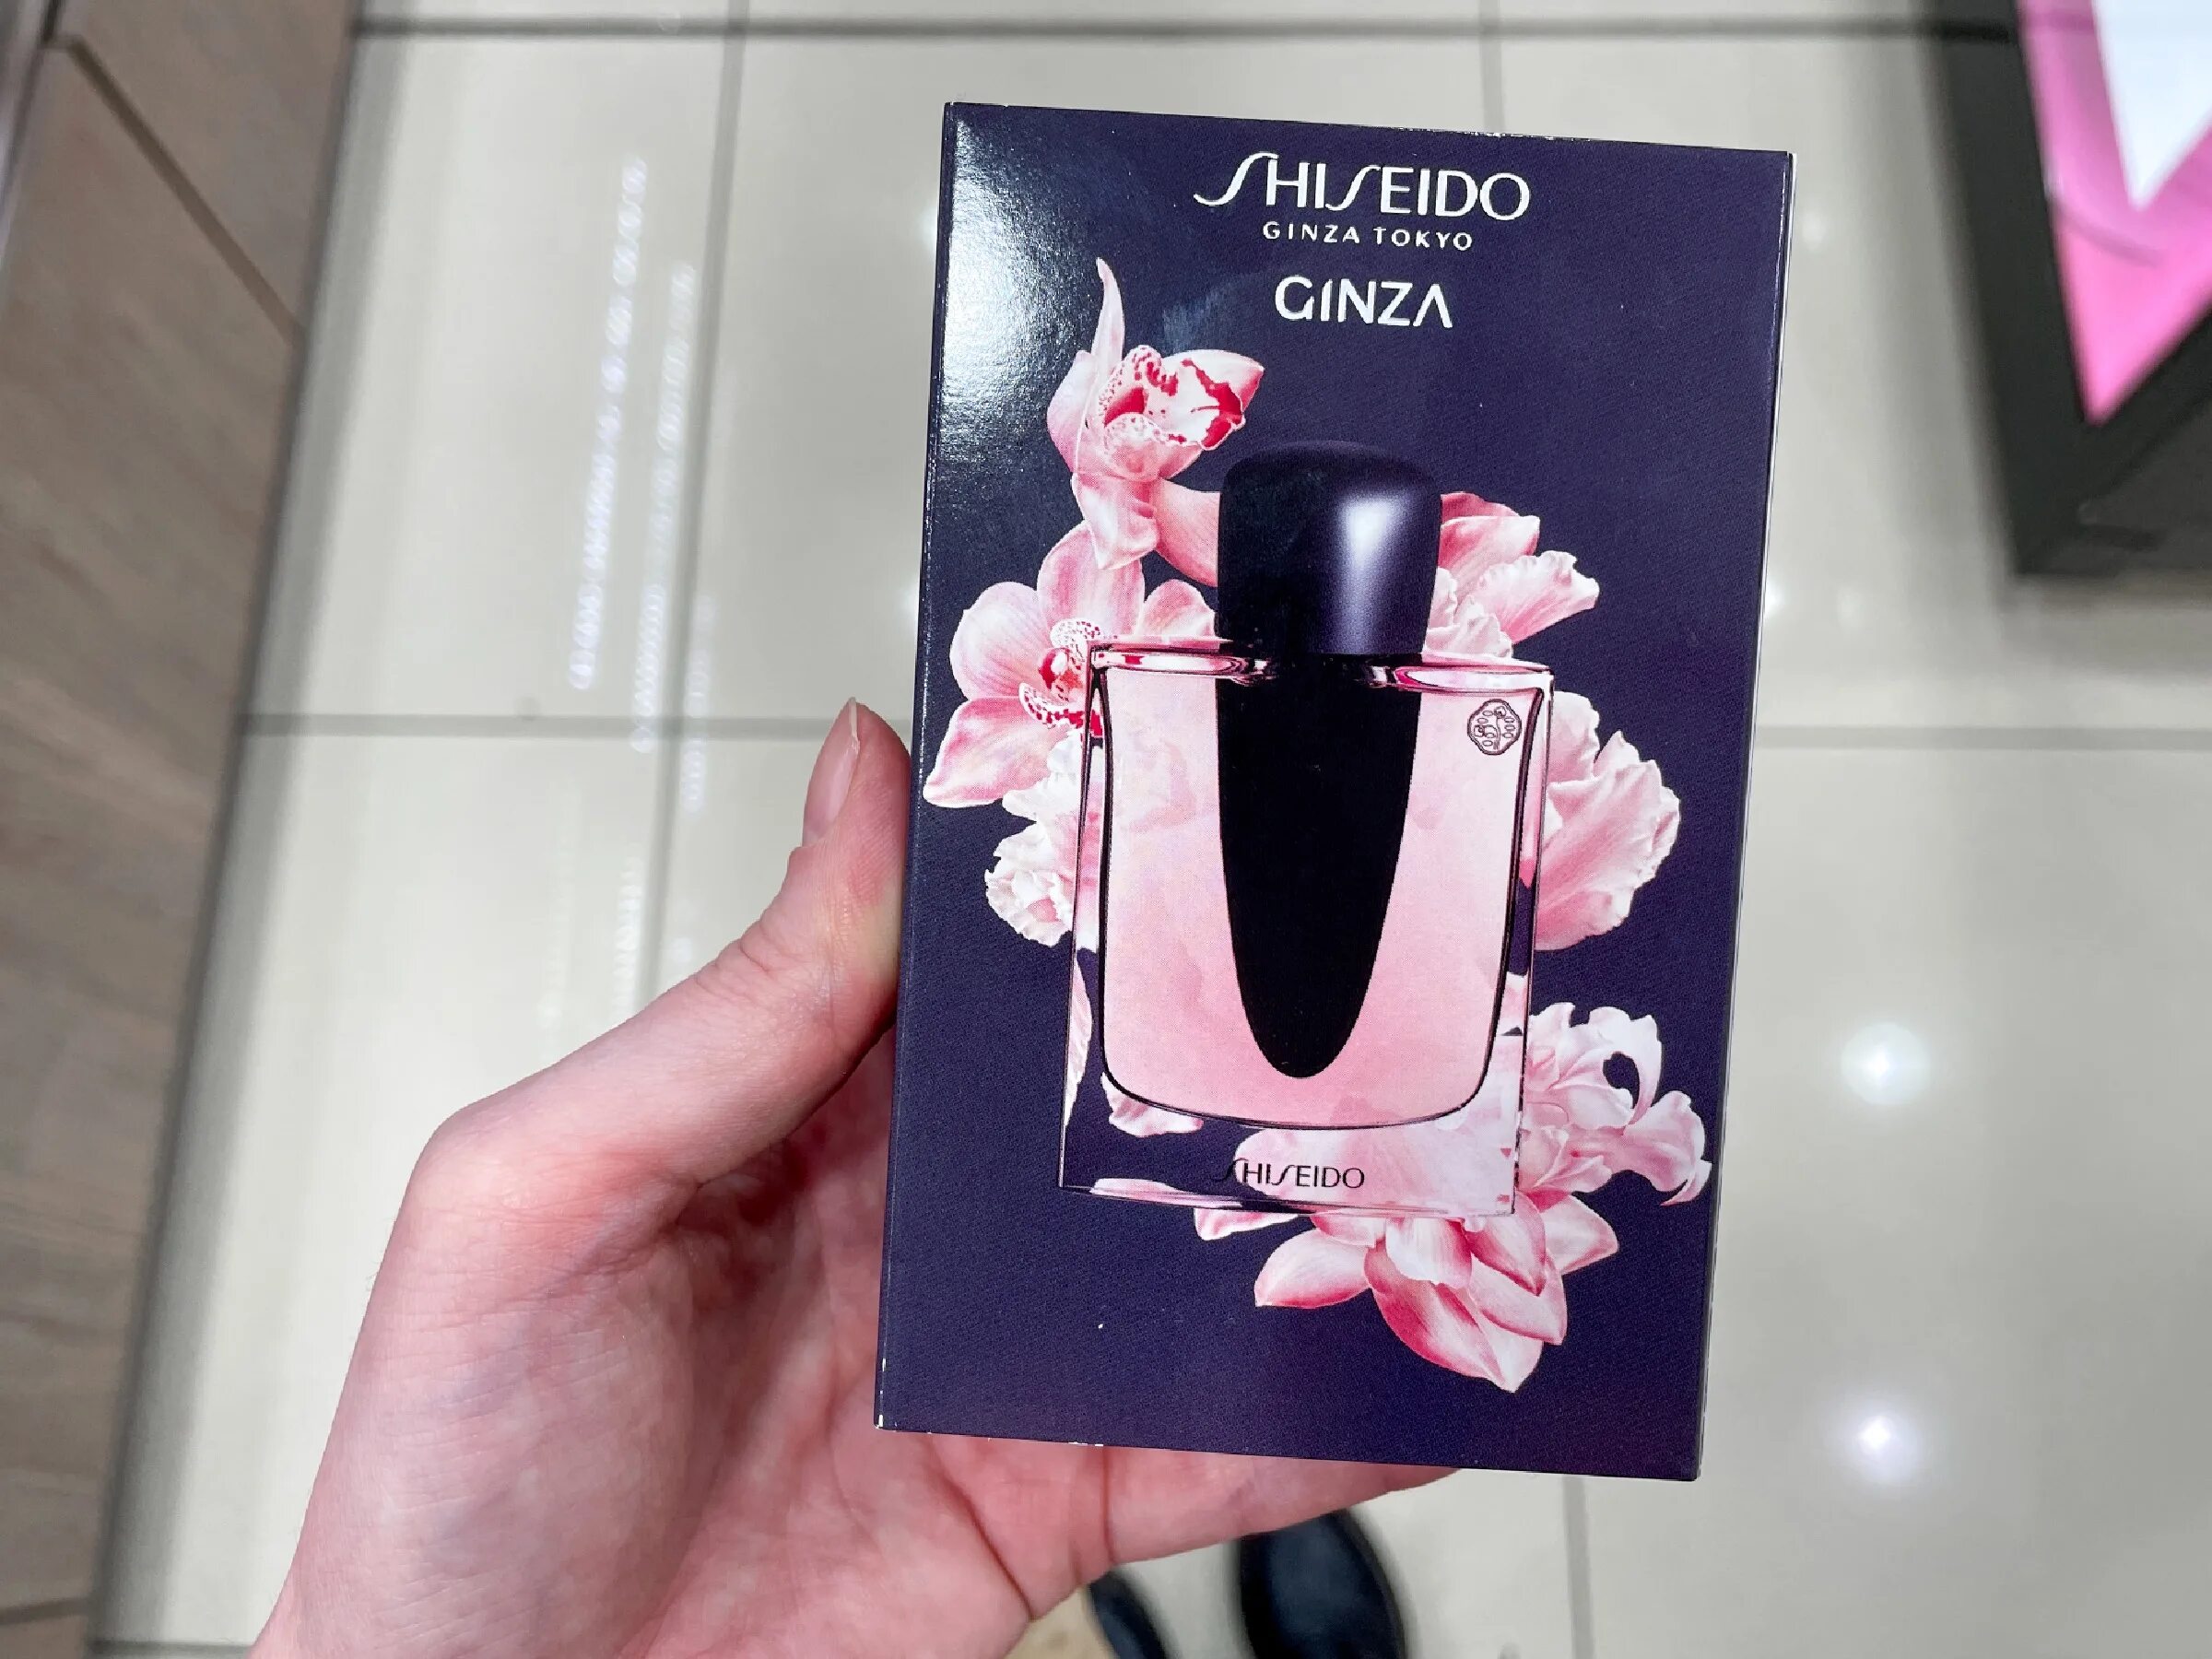 Гинза Токио Парфюм. Духи шисейдо Гинза. Туалетная вода Shiseido Ginza Tokyo. Новый аромат шисейдо 2021.